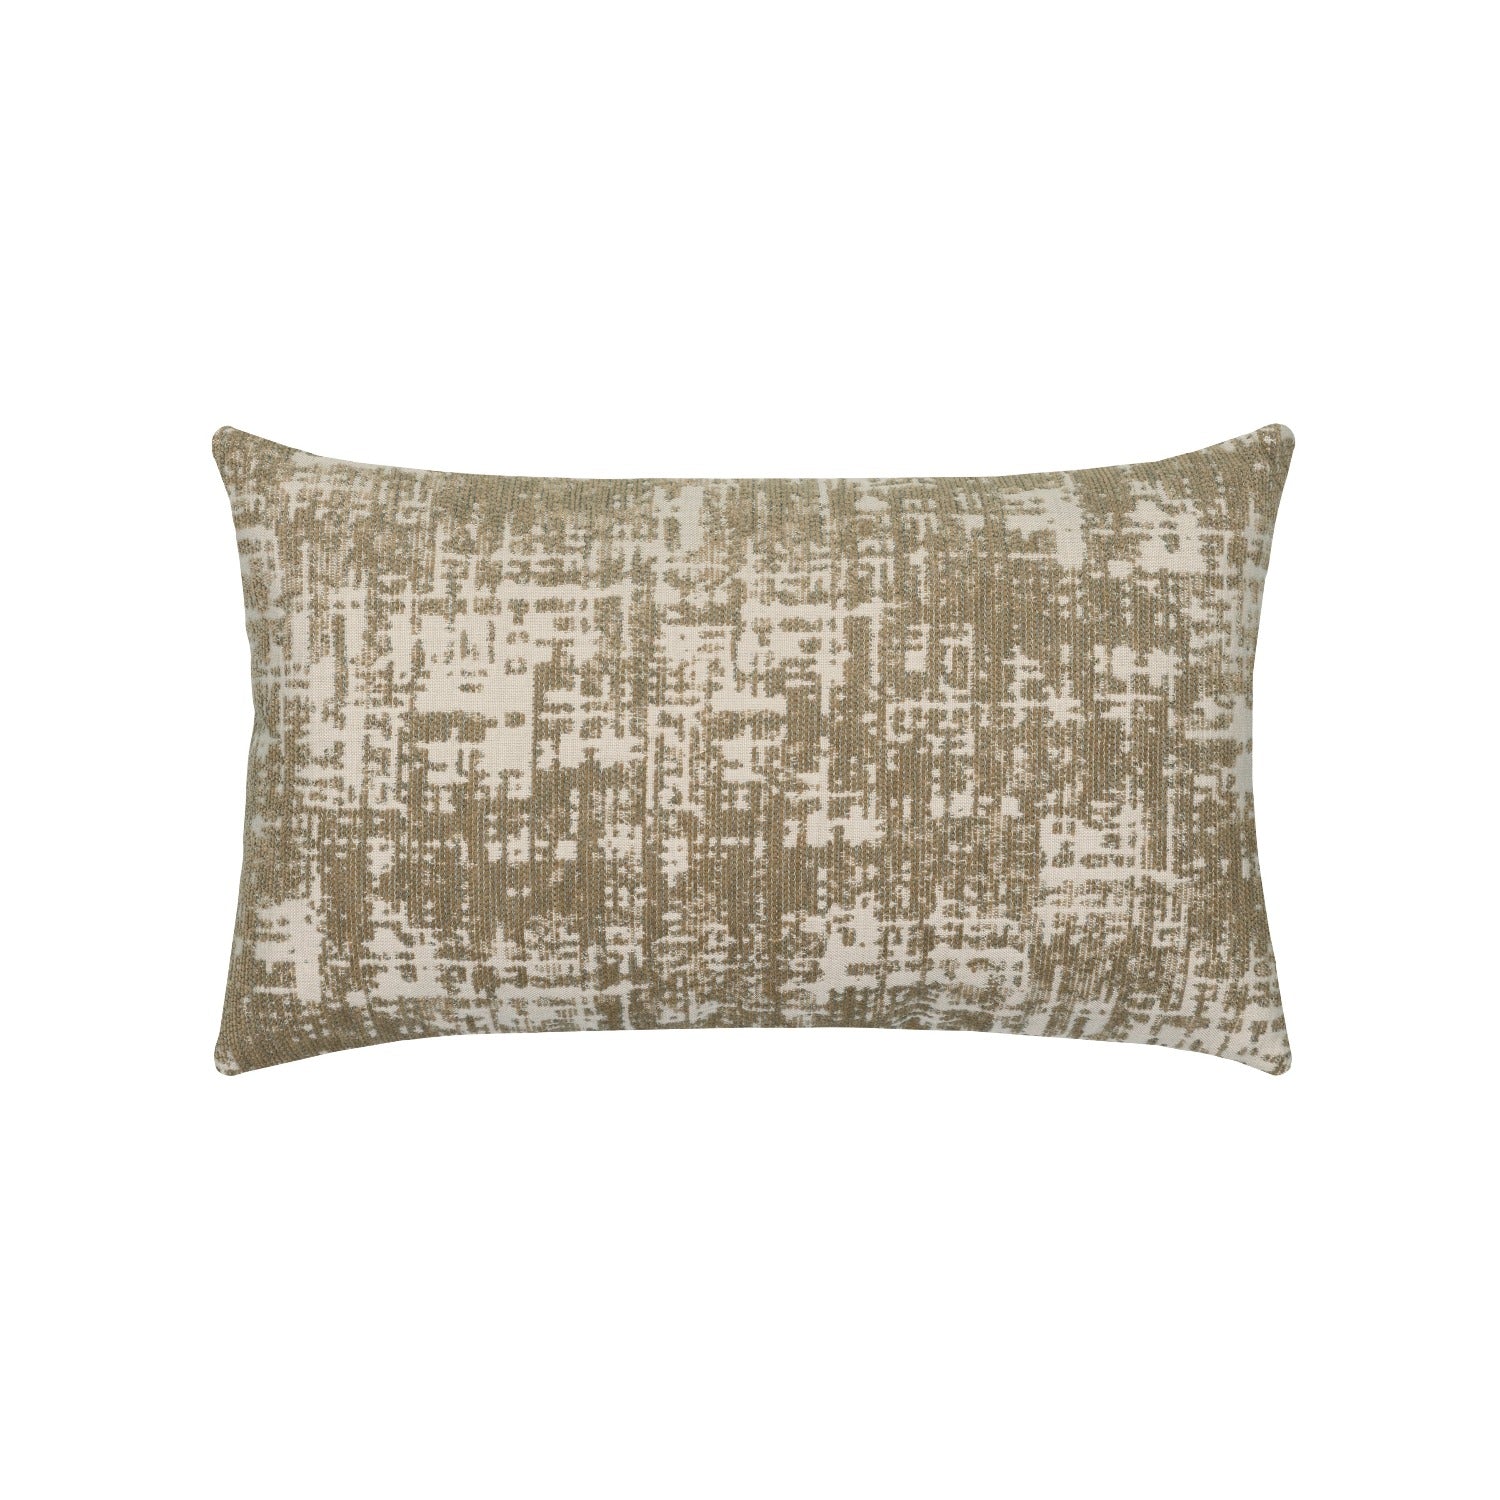 Elaine Smith 12" x 20" Lumbar Outdoor Pillow - Snug Camel - Polyester Fiber Fill Throw Pillows 12030982